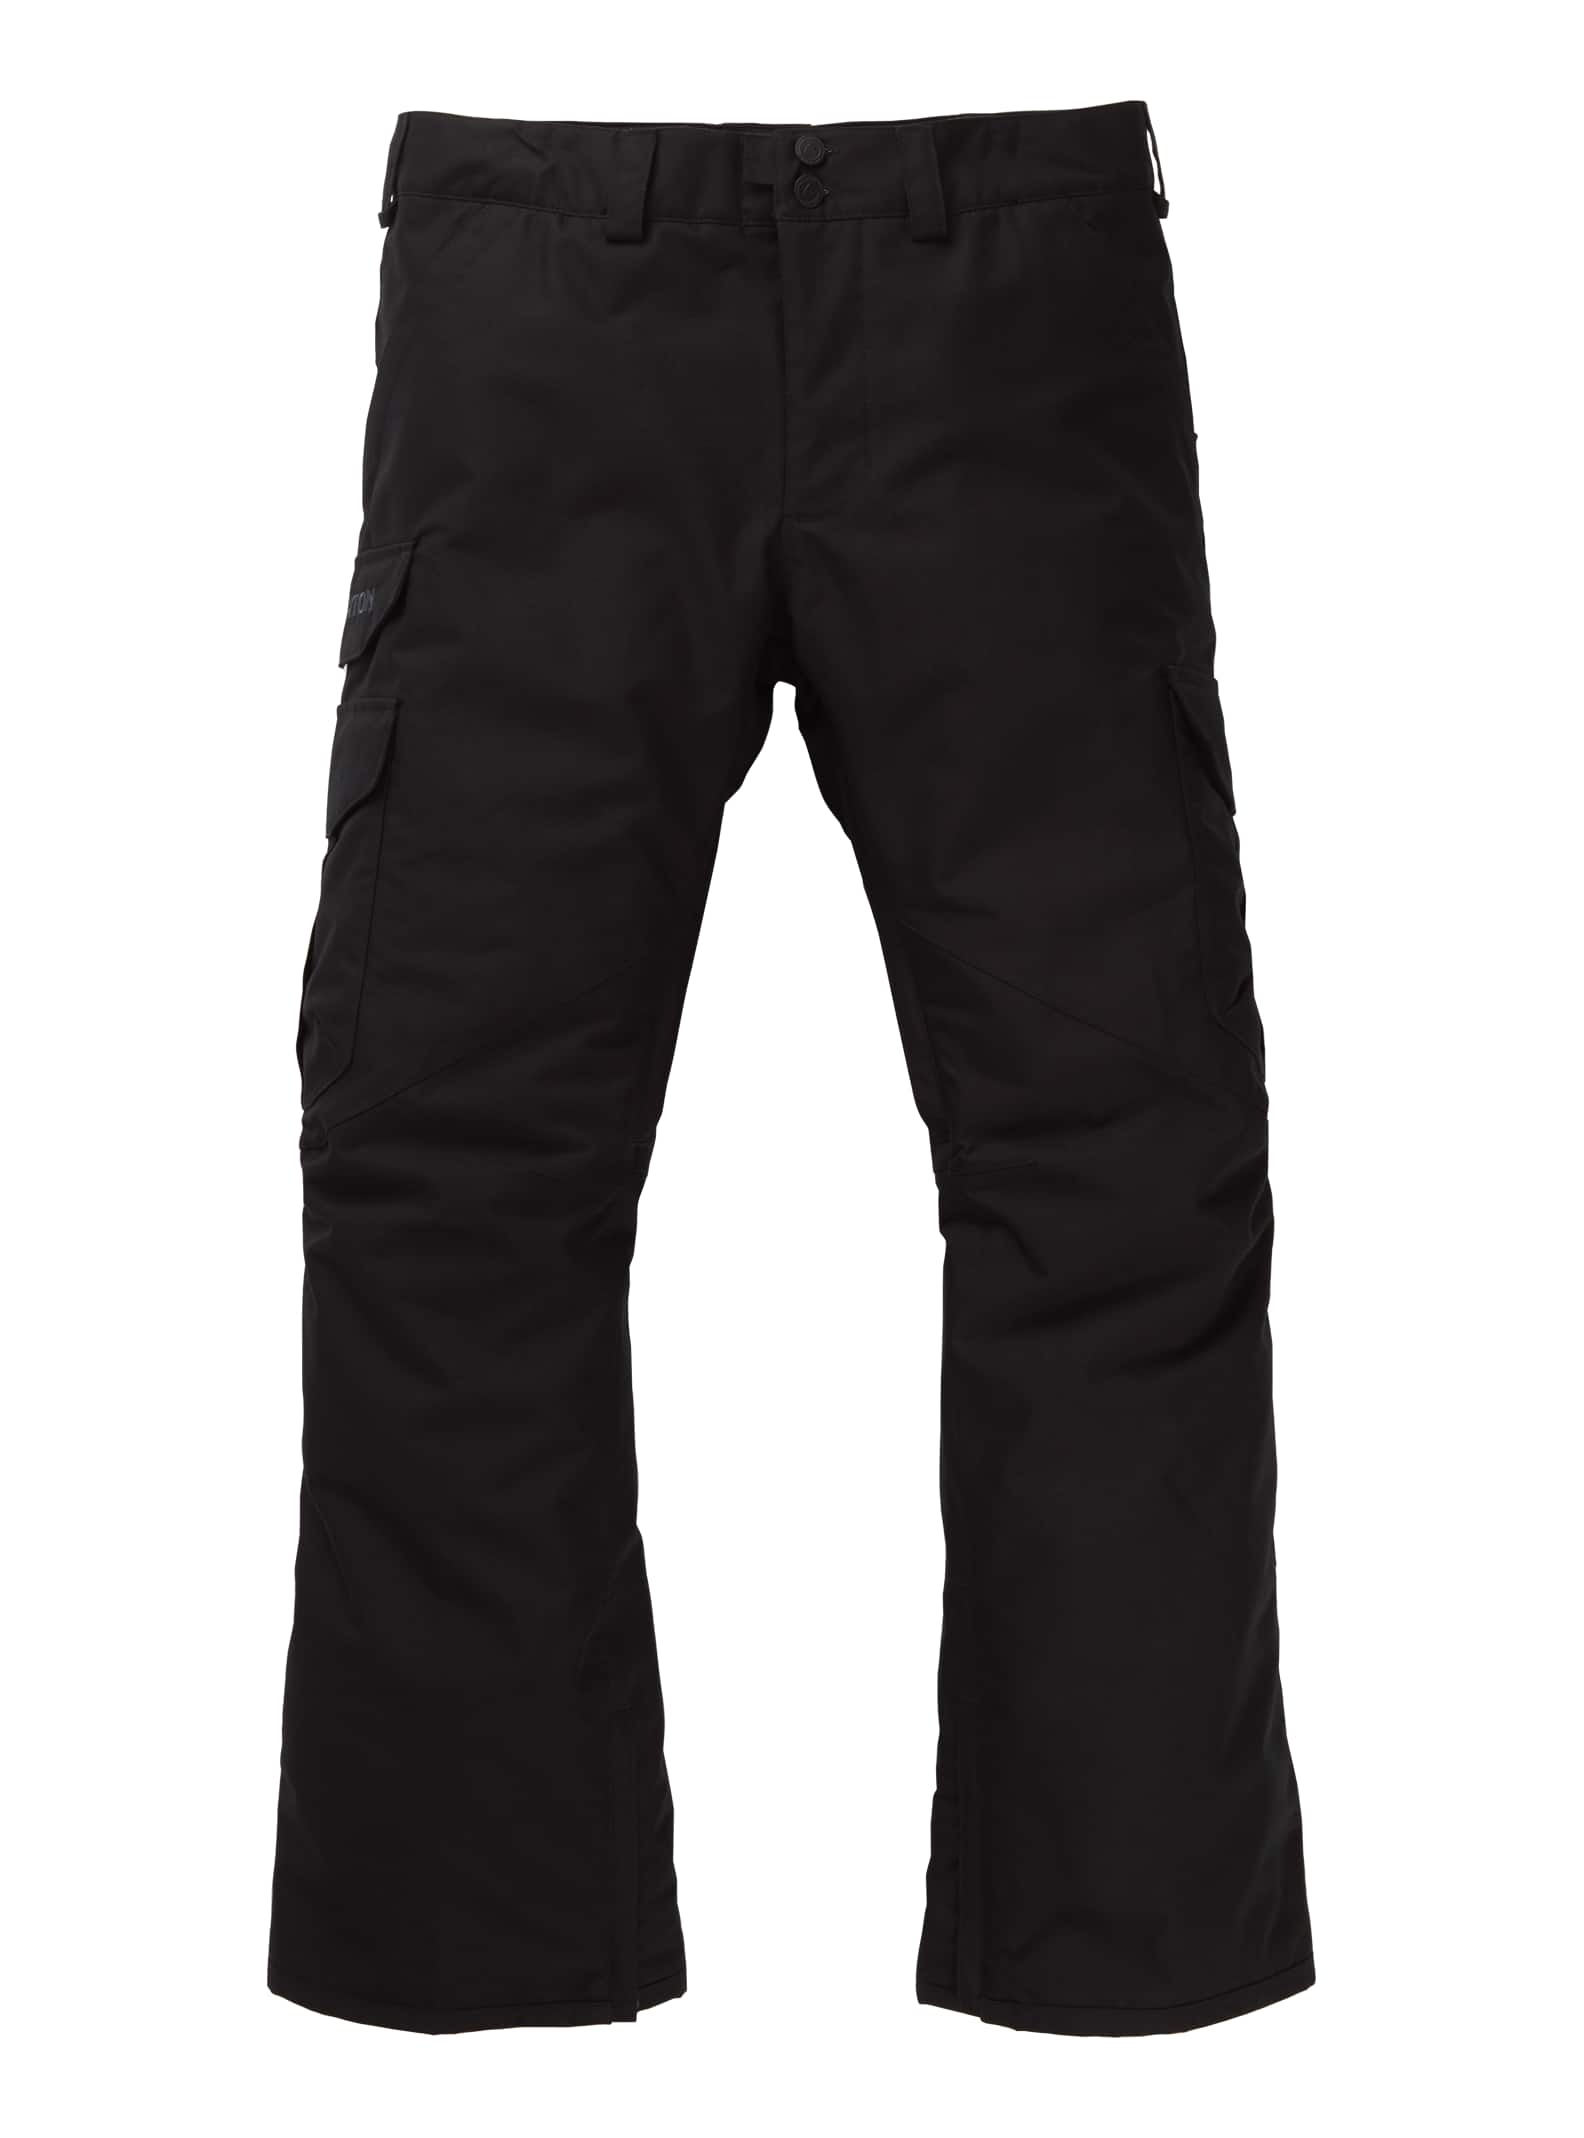 Men's Burton Cargo Pant - Relaxed Fit | Burton.com Winter 2020 US